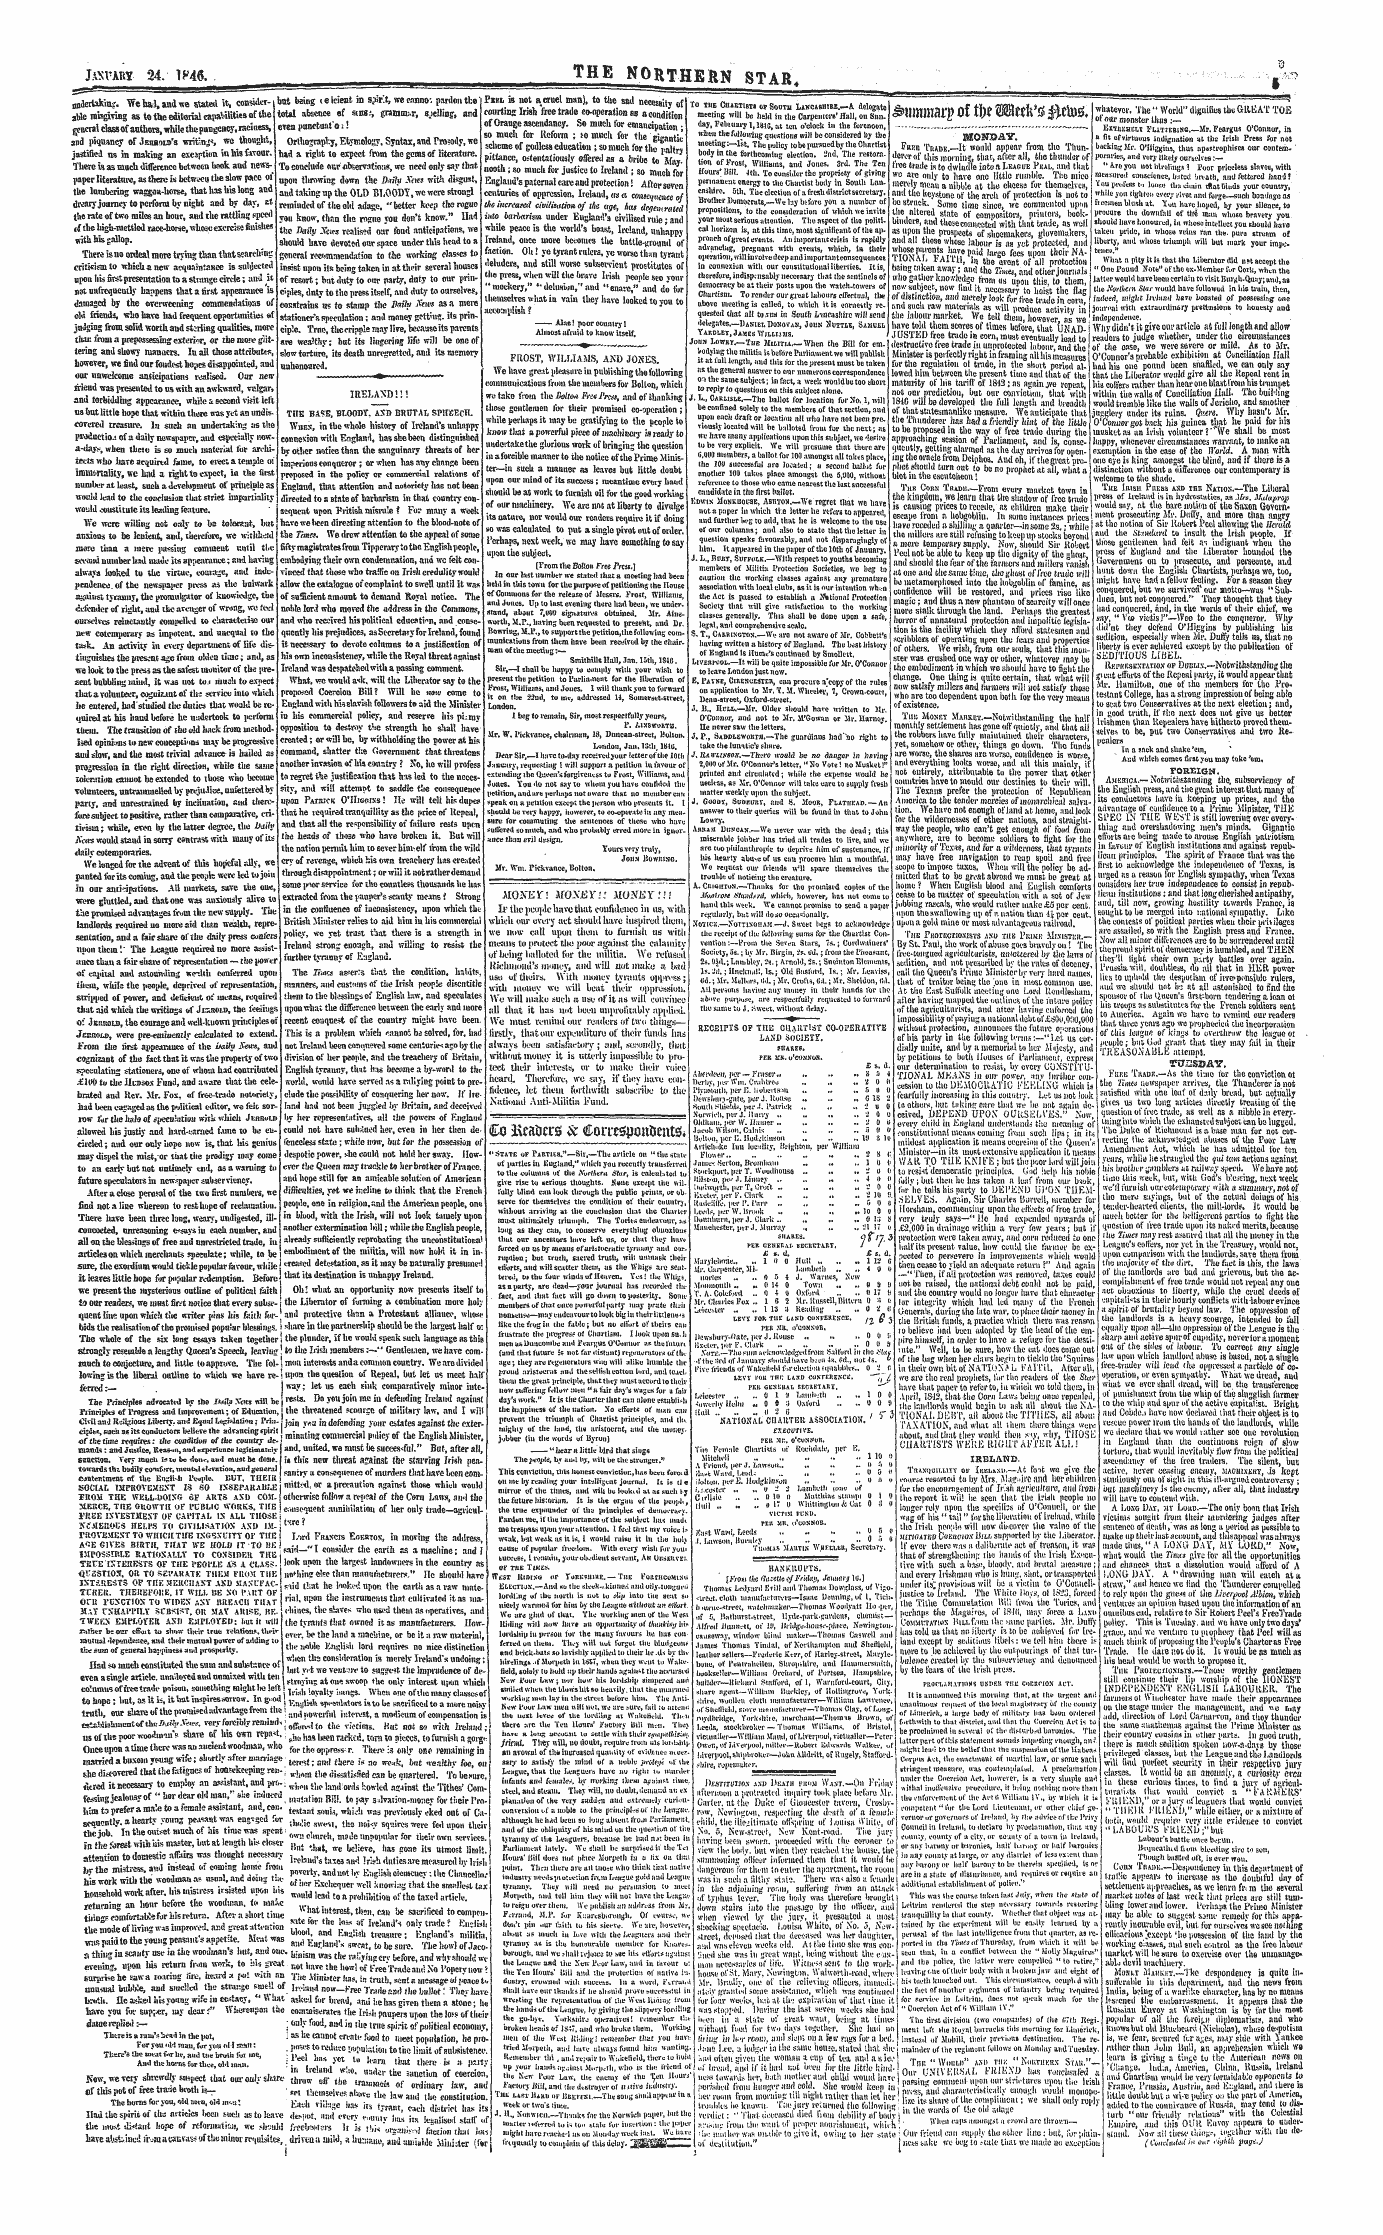 Northern Star (1837-1852): jS F Y, 1st edition - Atoner: Atoxjev.': Money:. ';